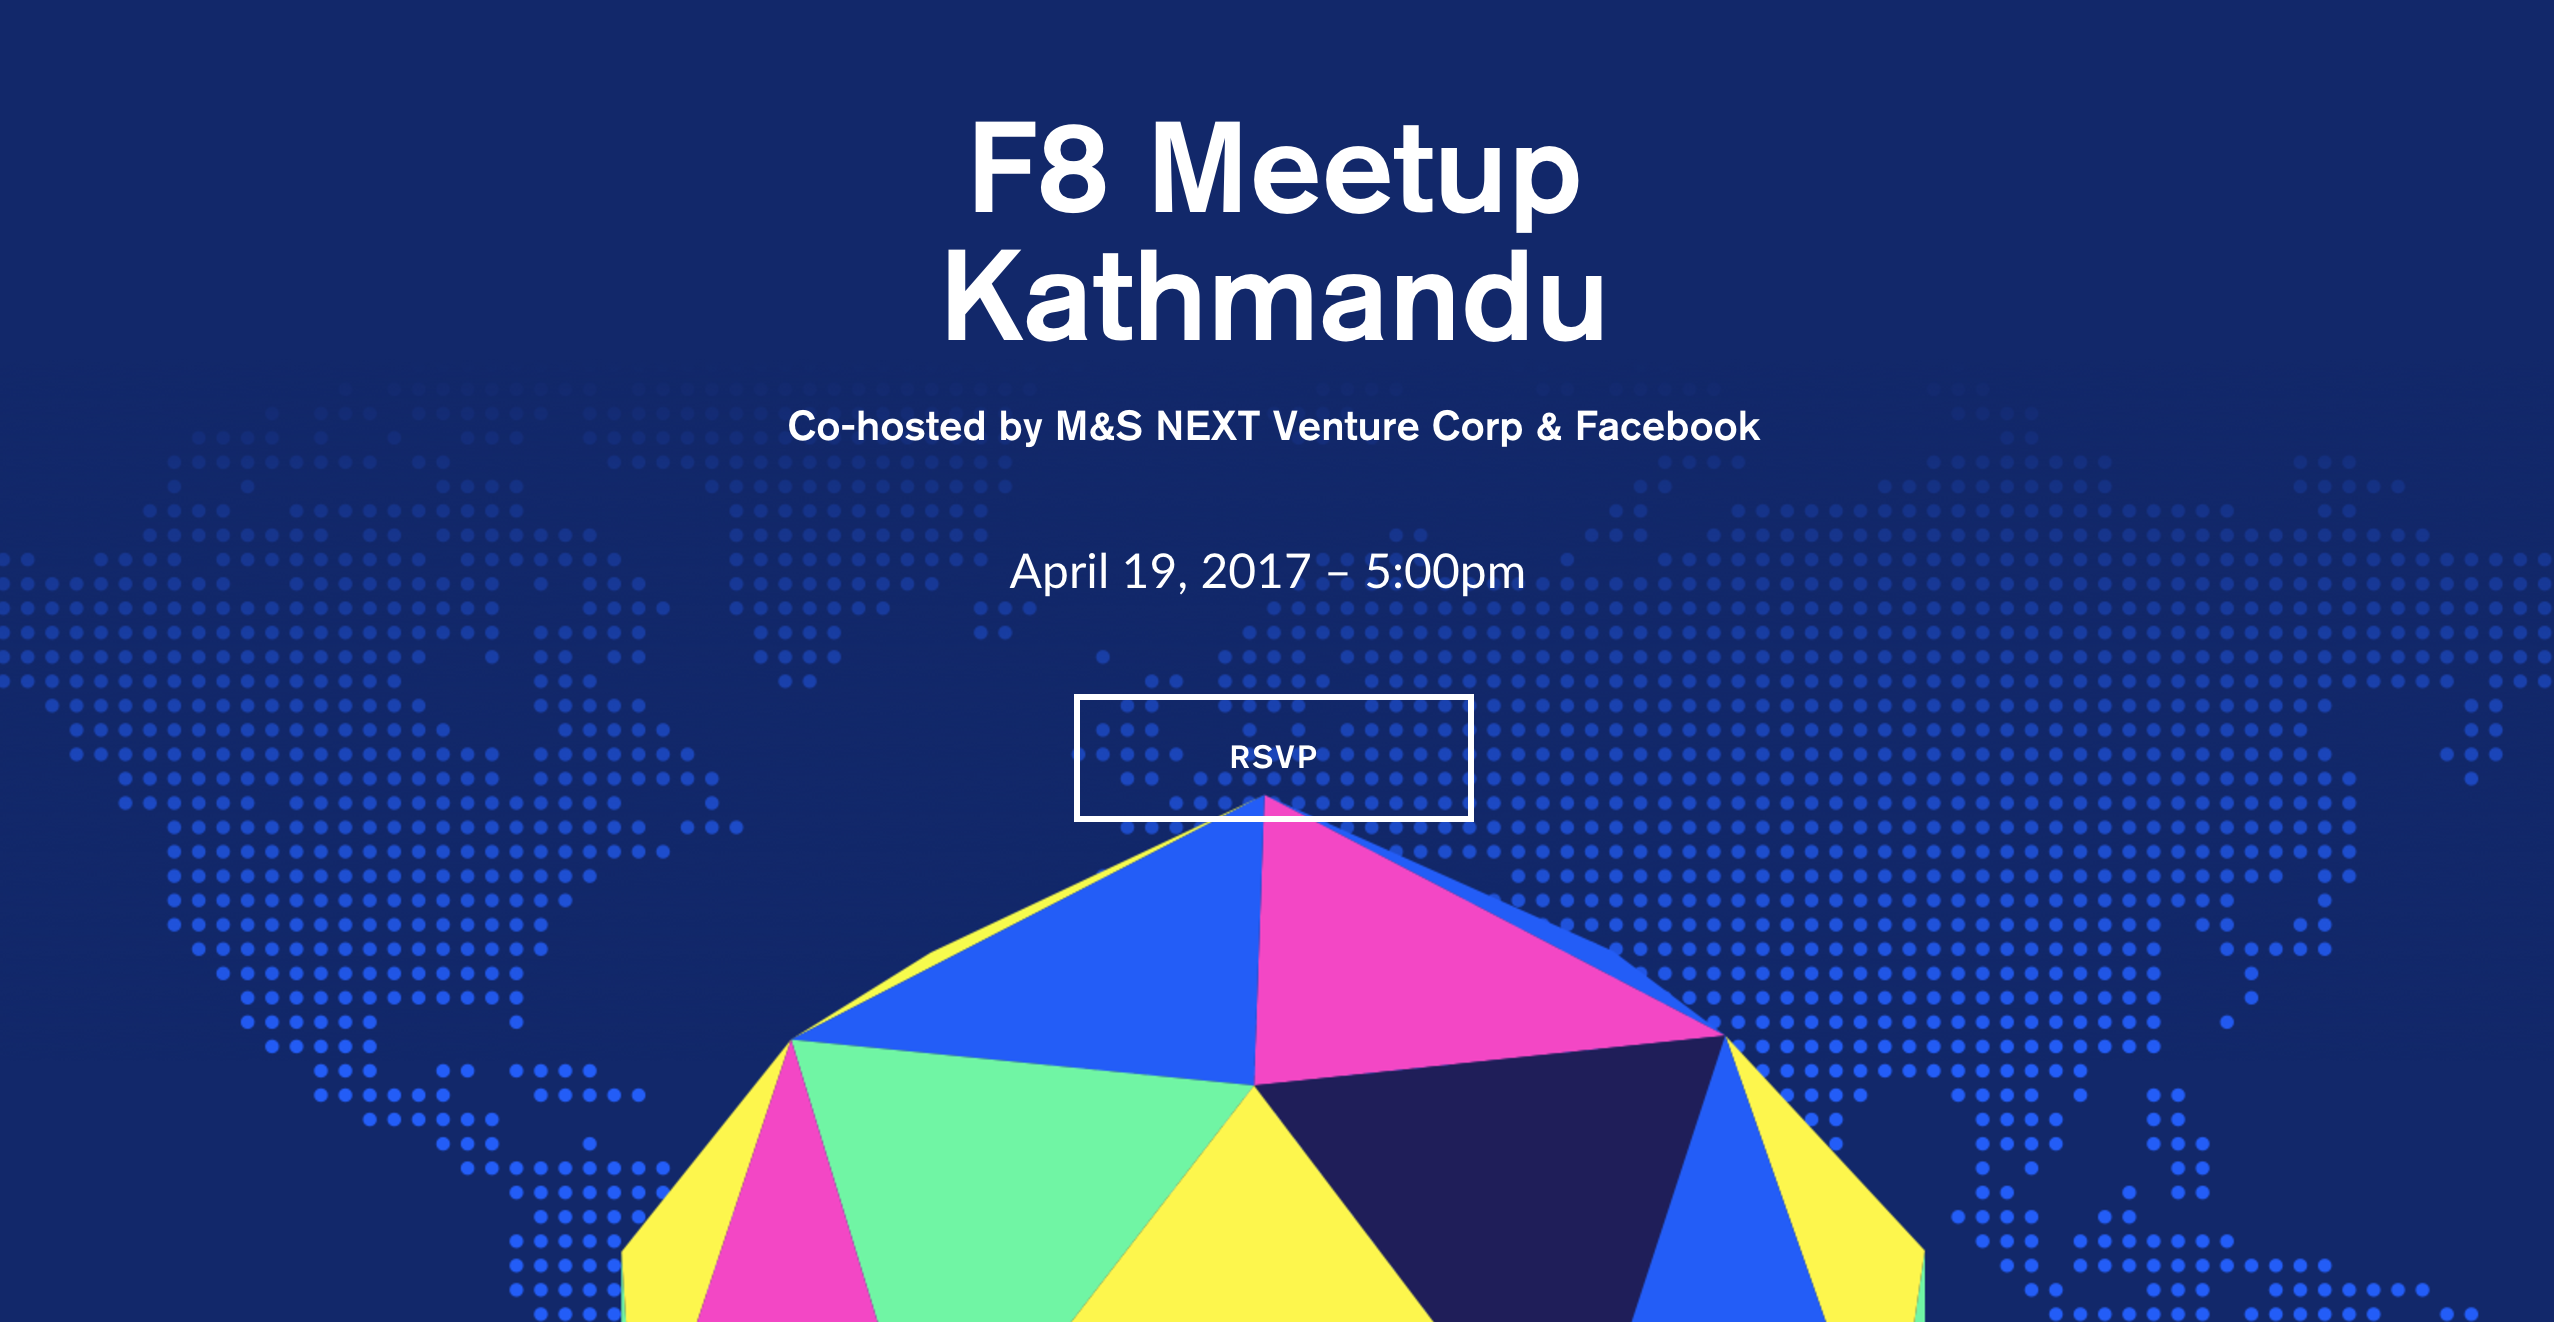 F8 Meetup Kathmandu 2017 On April 19